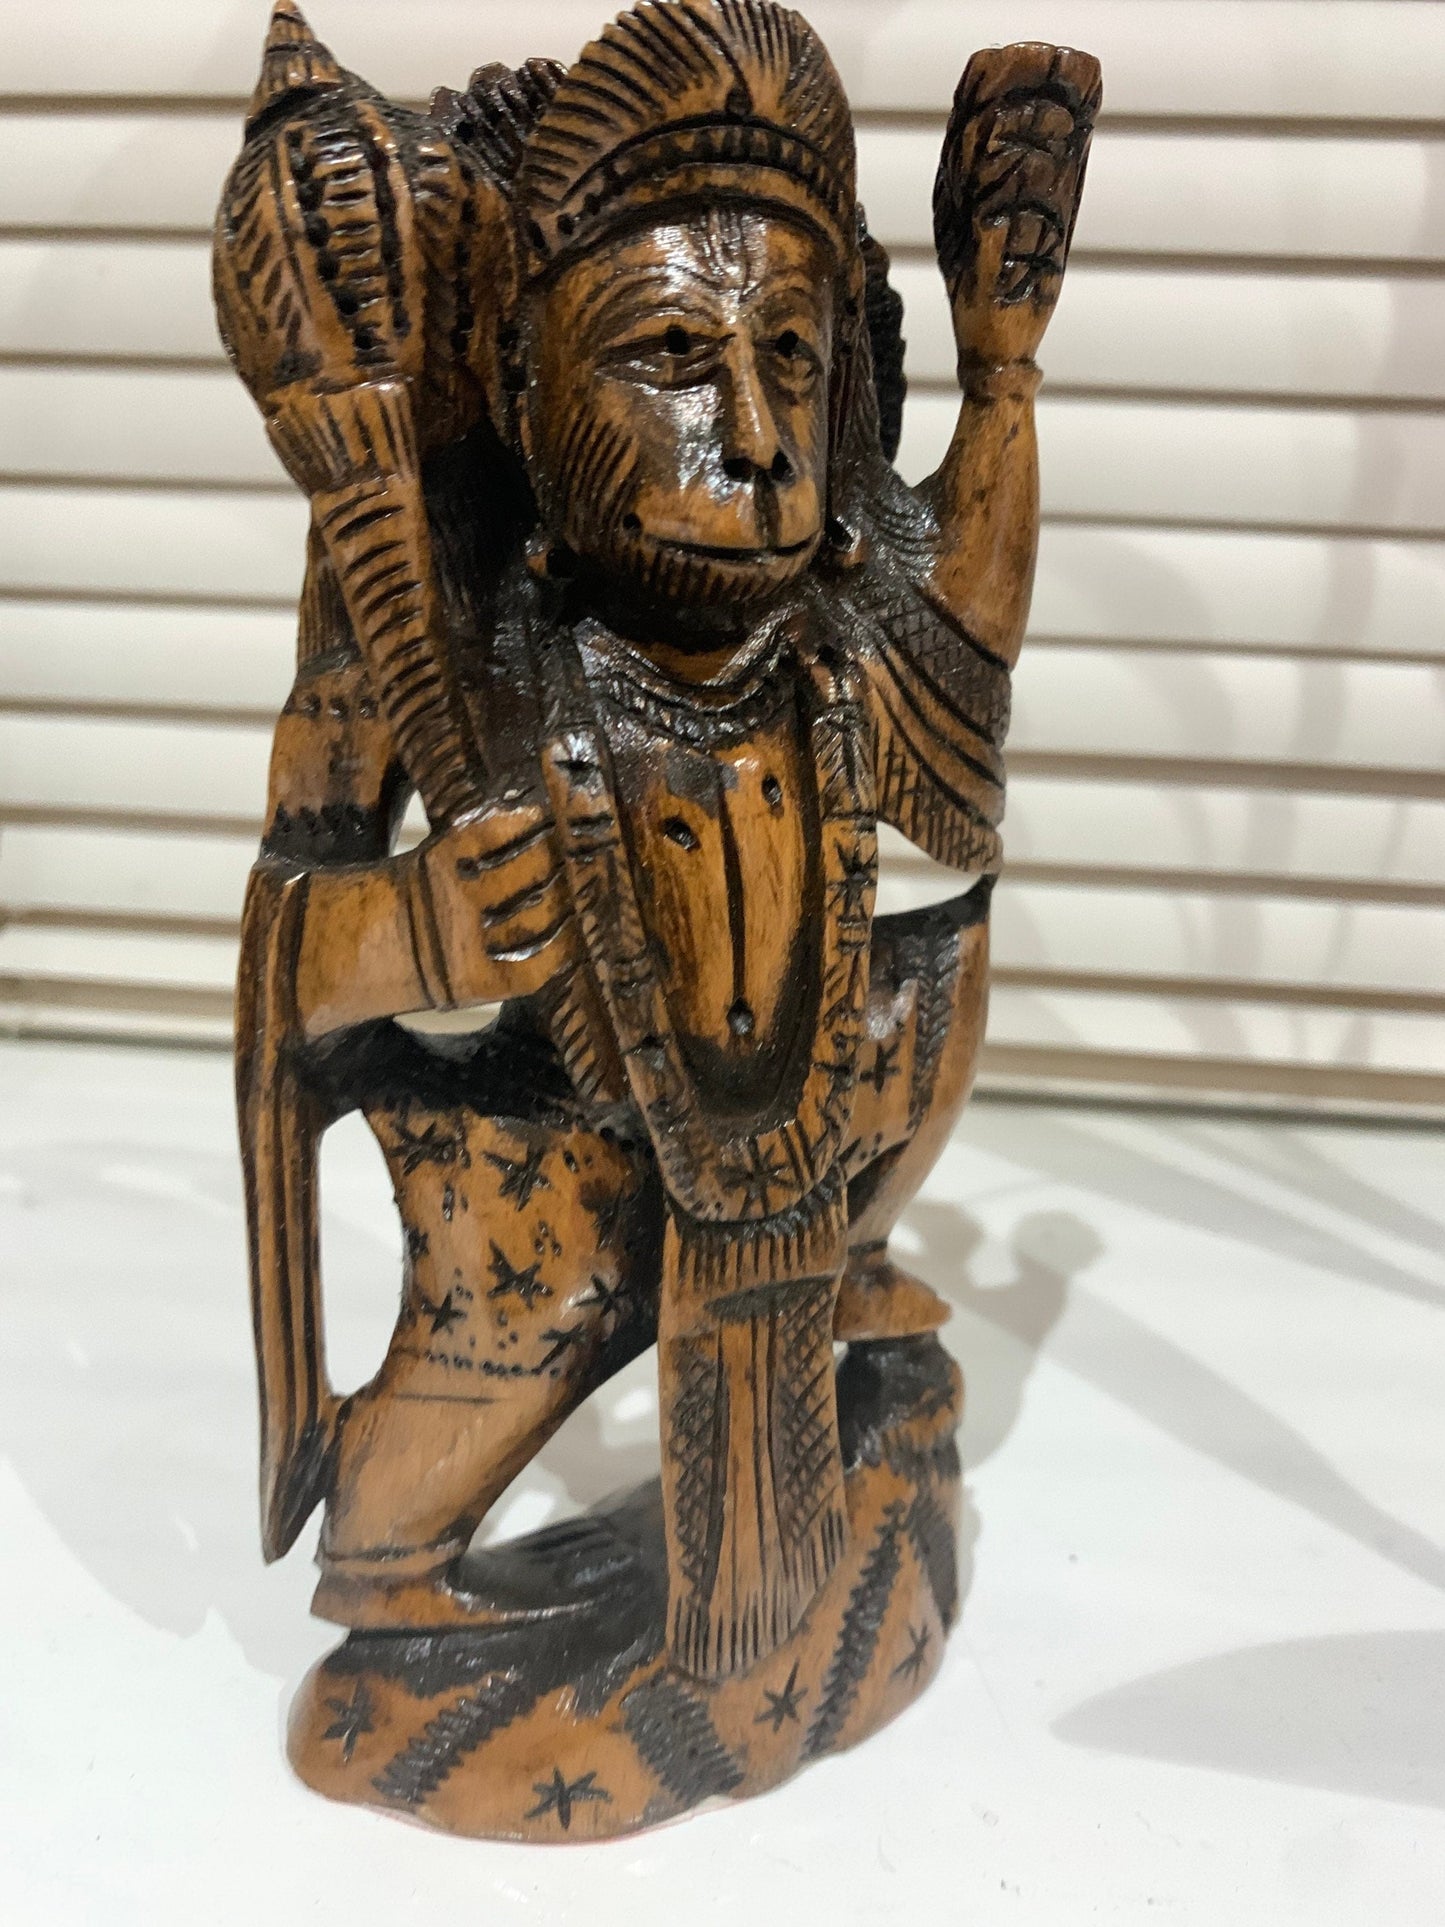 Hanuman Statue 6” wooden Hand Carved statue, Lord Hanumana idol, Hindu deity God, Monkey god Hanuman figure religious prayer home decor gift